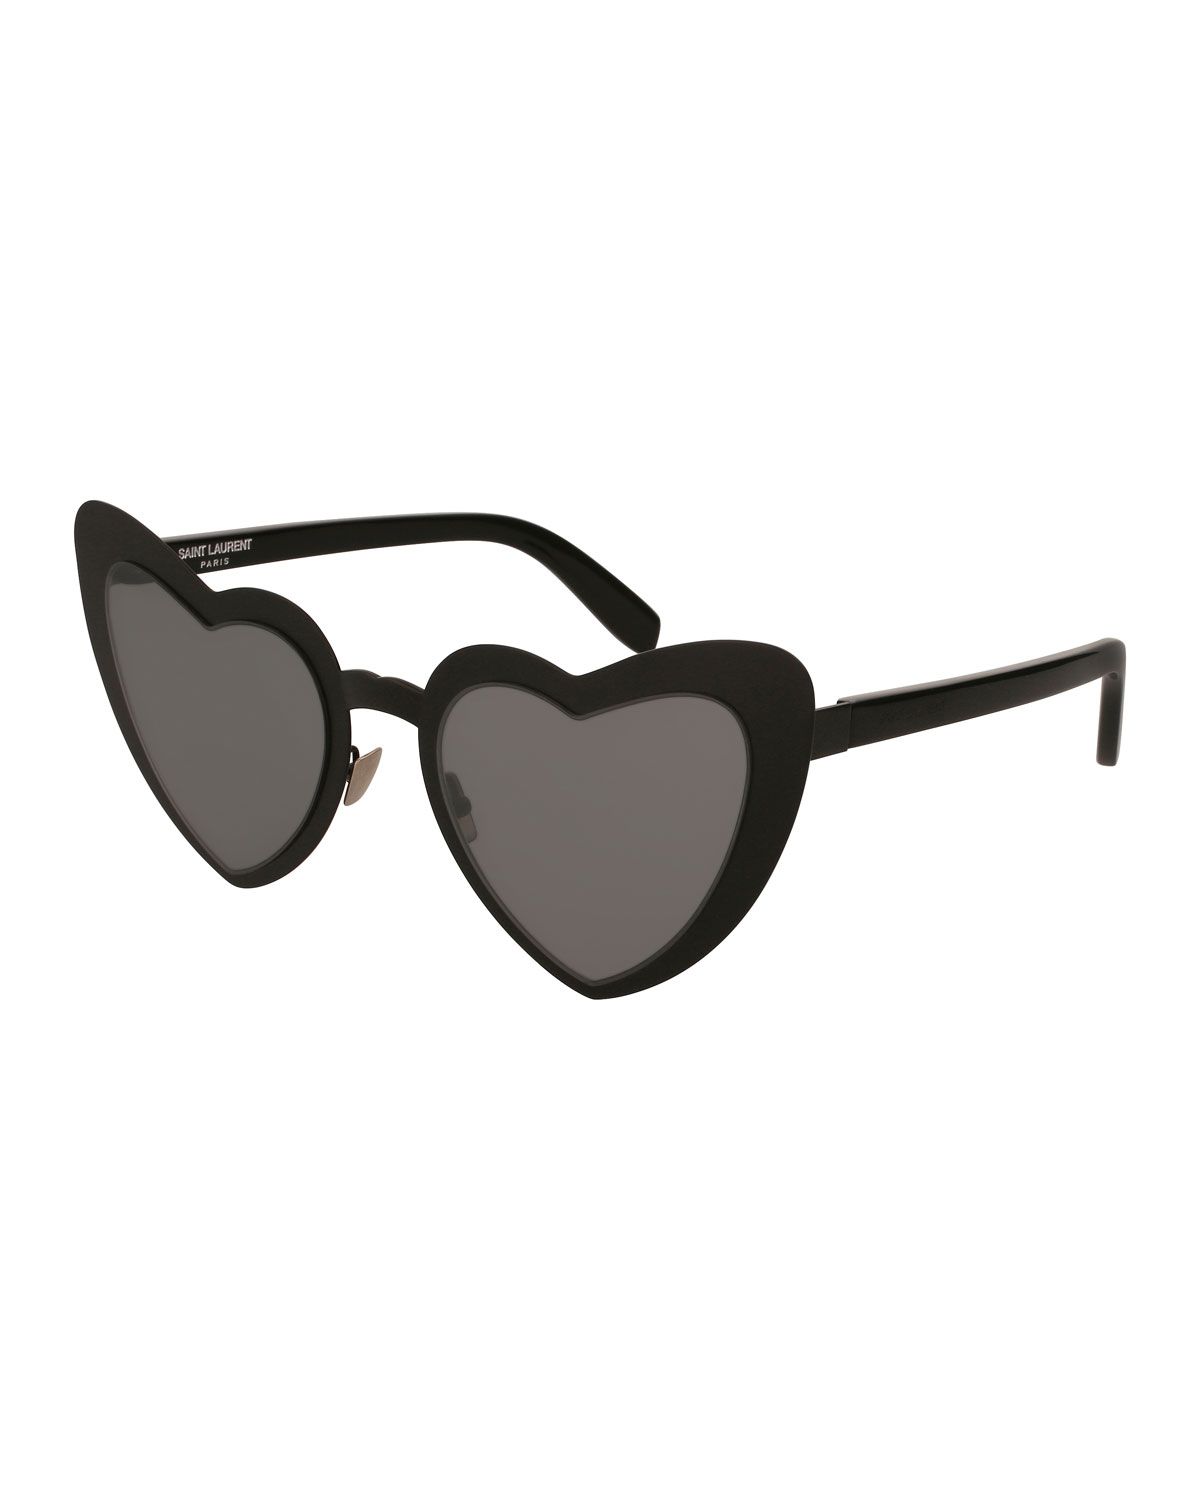 Lou Lou Heart-Shaped Sunglasses, Black | Bergdorf Goodman